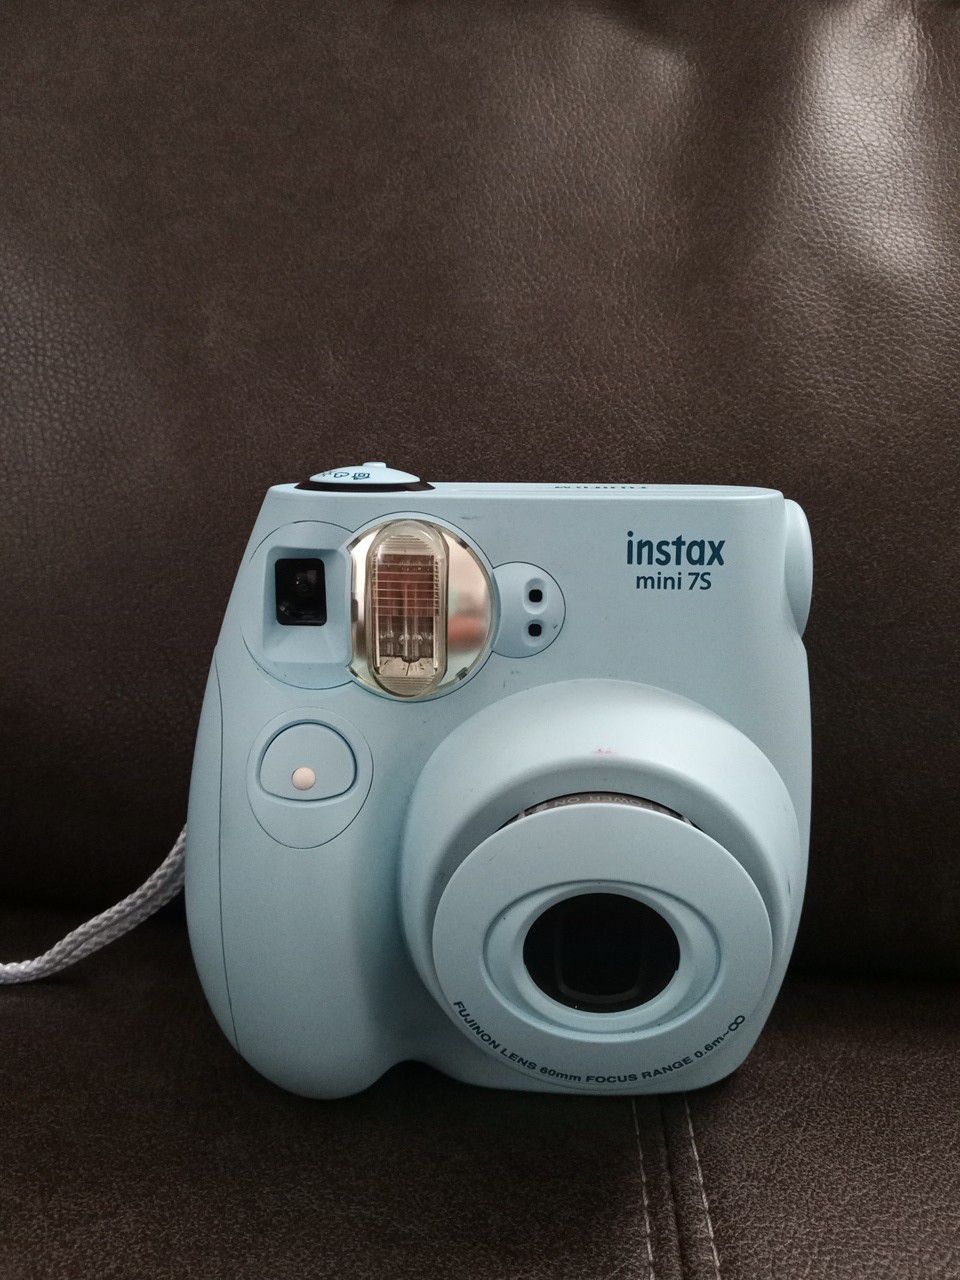 Fujifilm Instax mini 7s camera